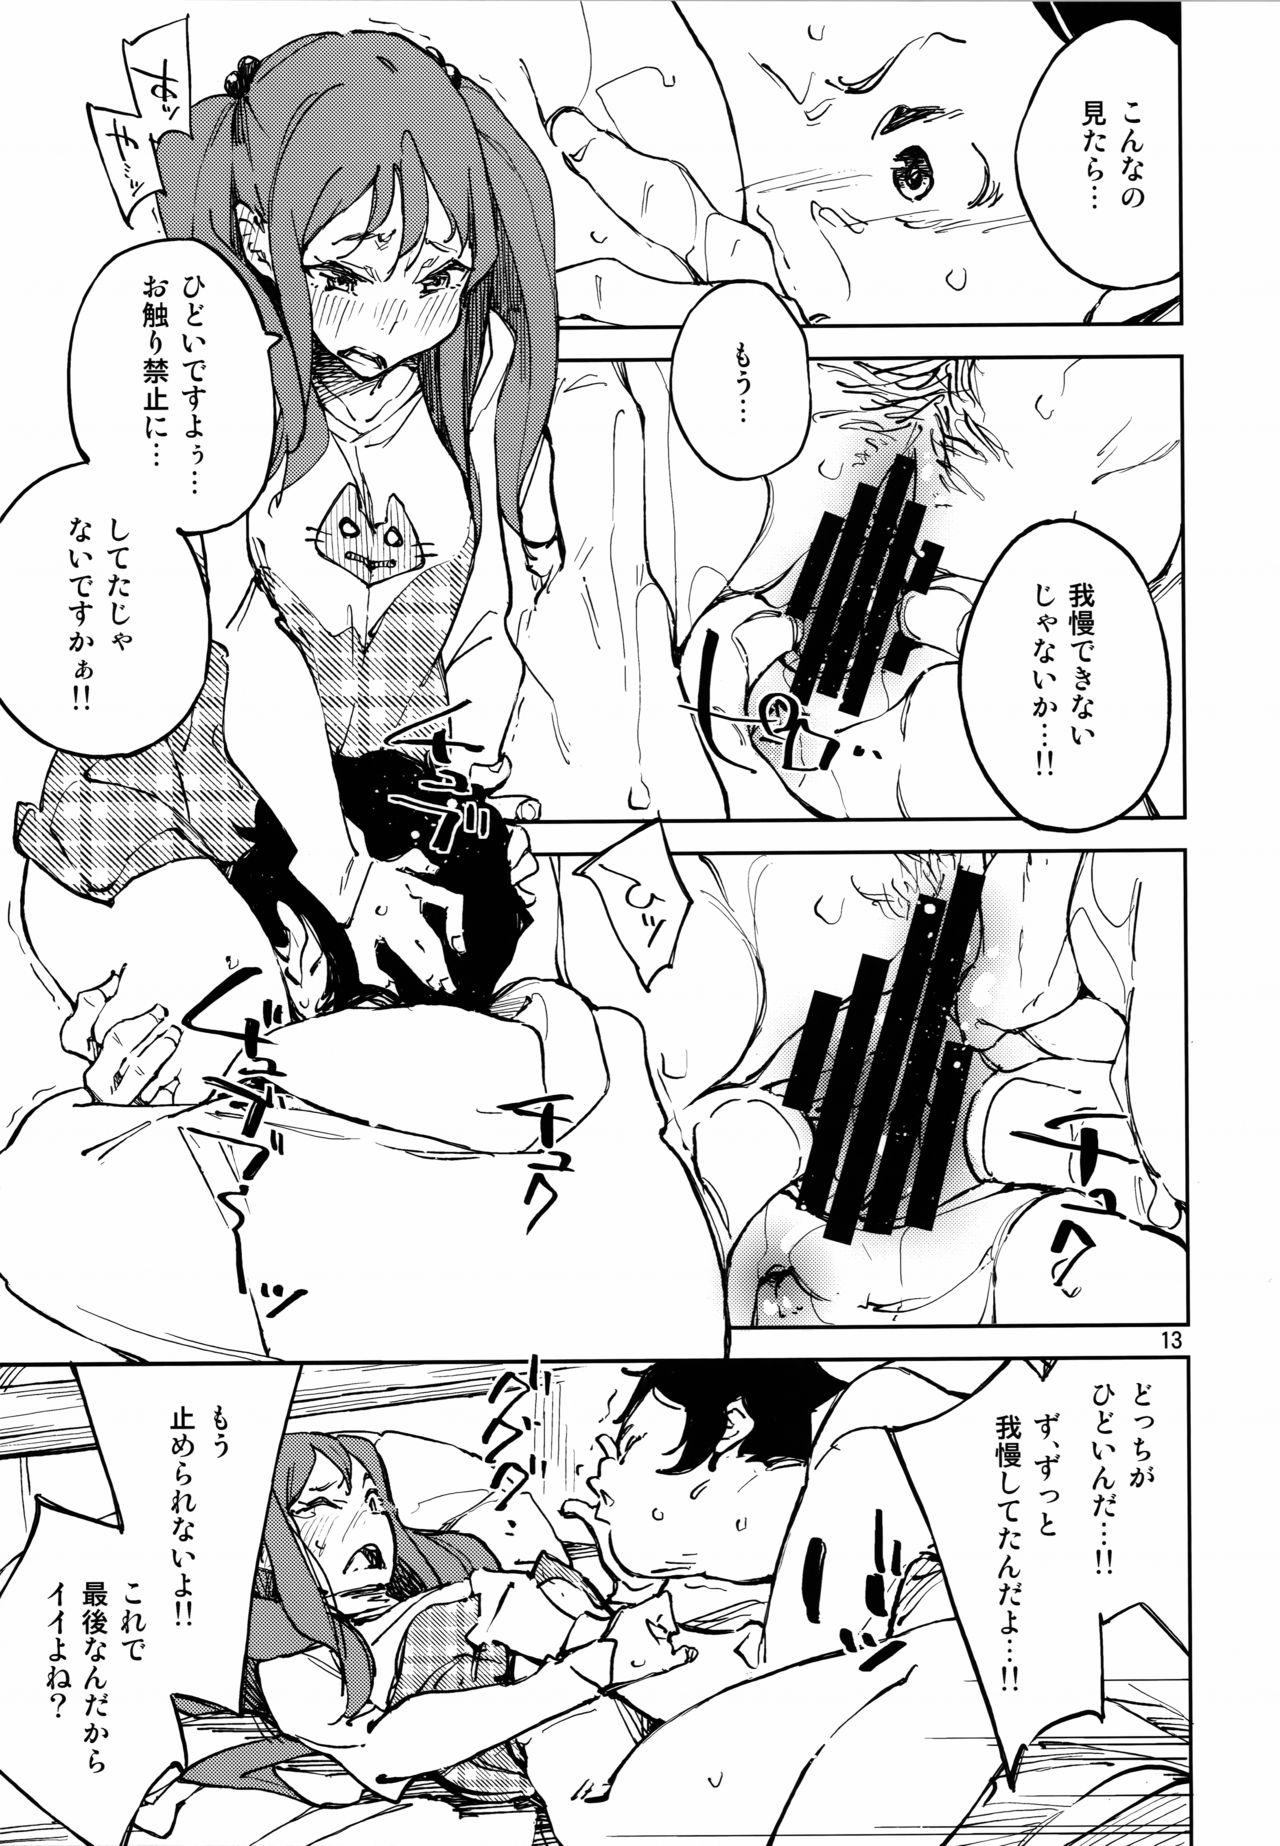 Best Blow Jobs Ever Nakimushi Tenshi no Inu - Wake up girls Awesome - Page 12